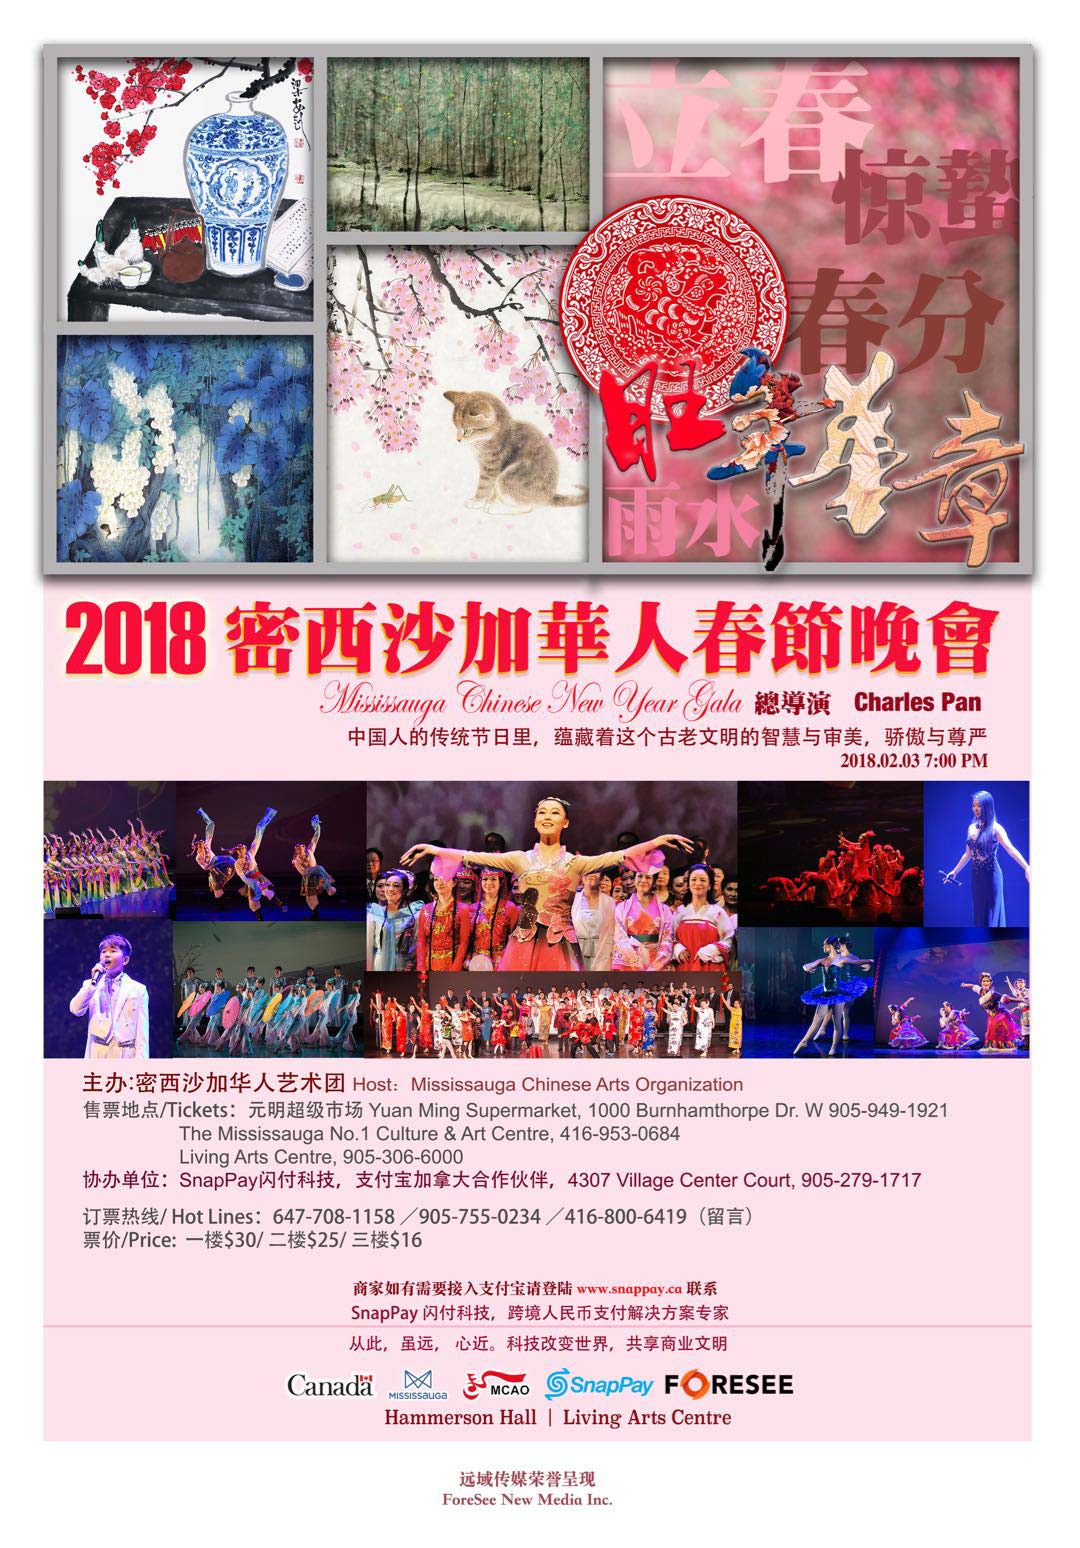 2018 MCAO Mississauga Chinese New Year Gala